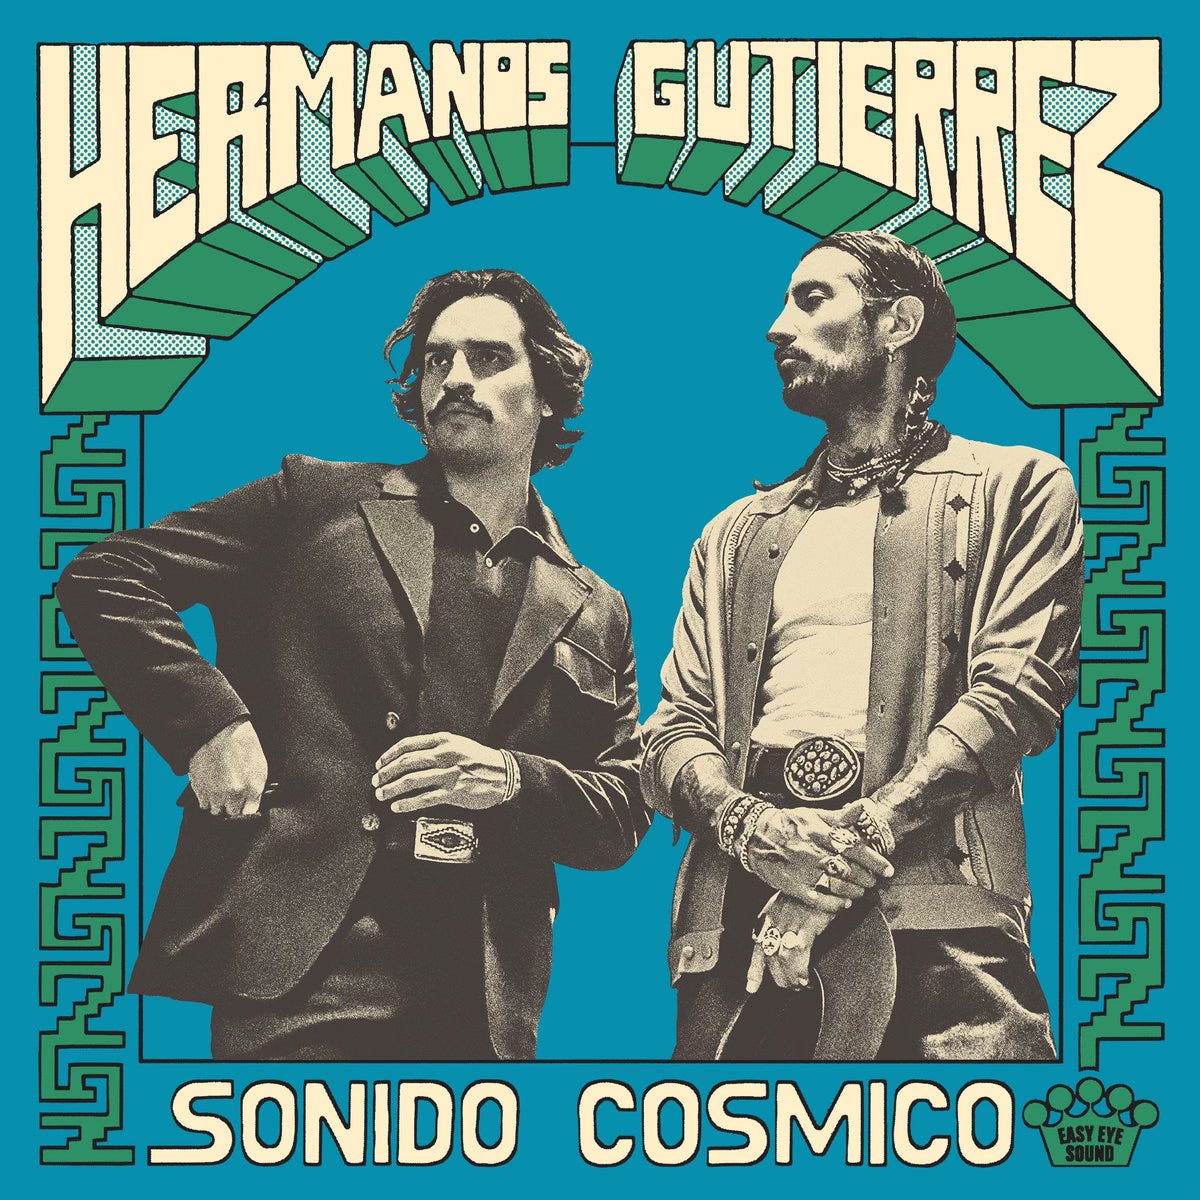 Forthcoming album from Hermanos Gutiérrez